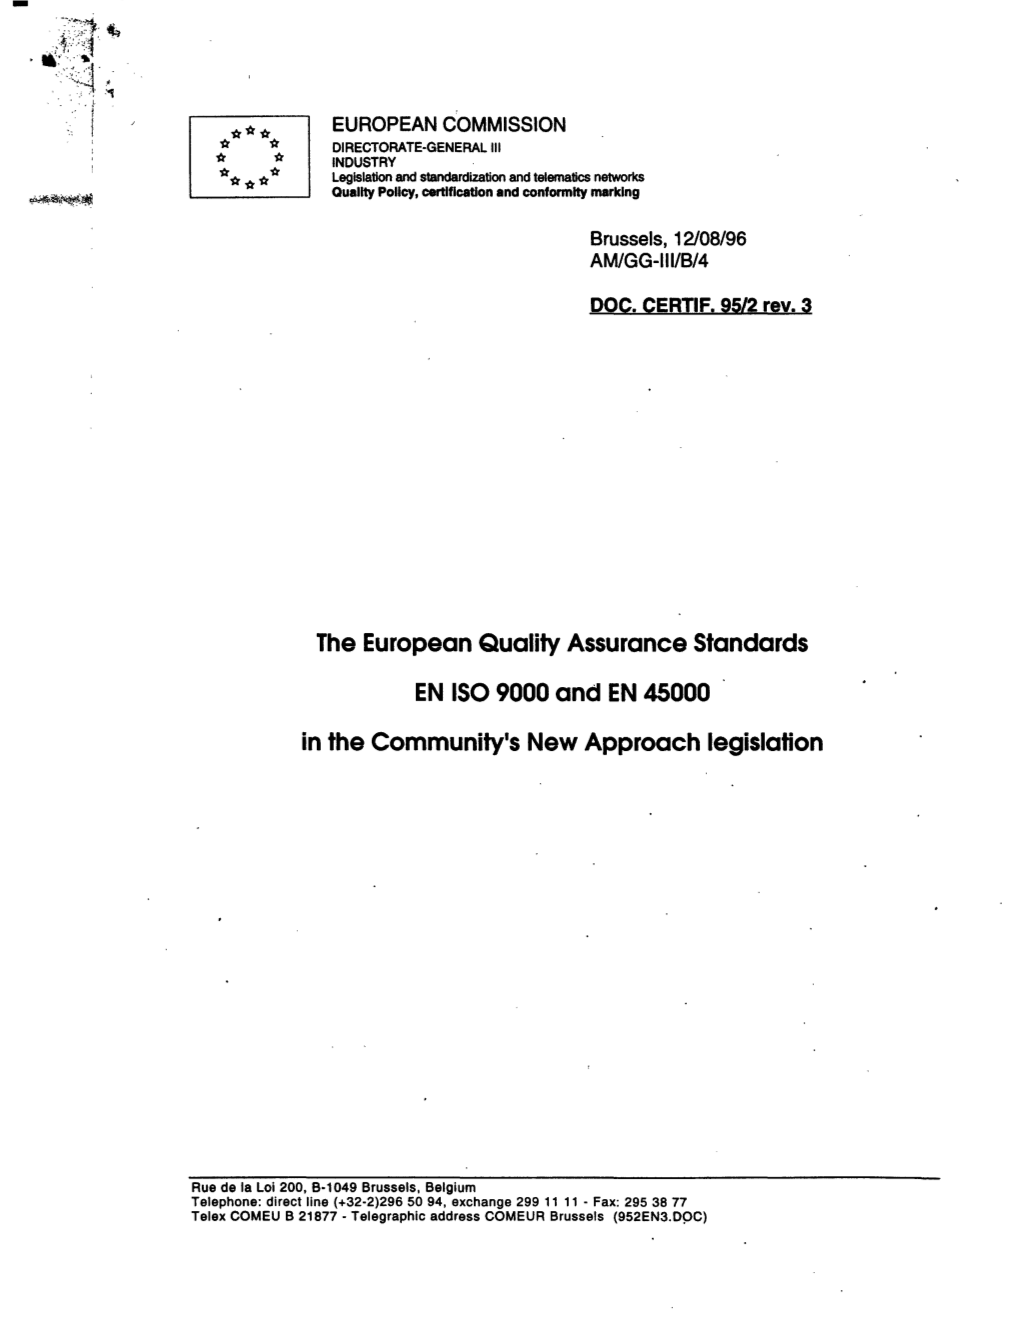 The European Quality Assurance Standards EN ISO 9000 and EN